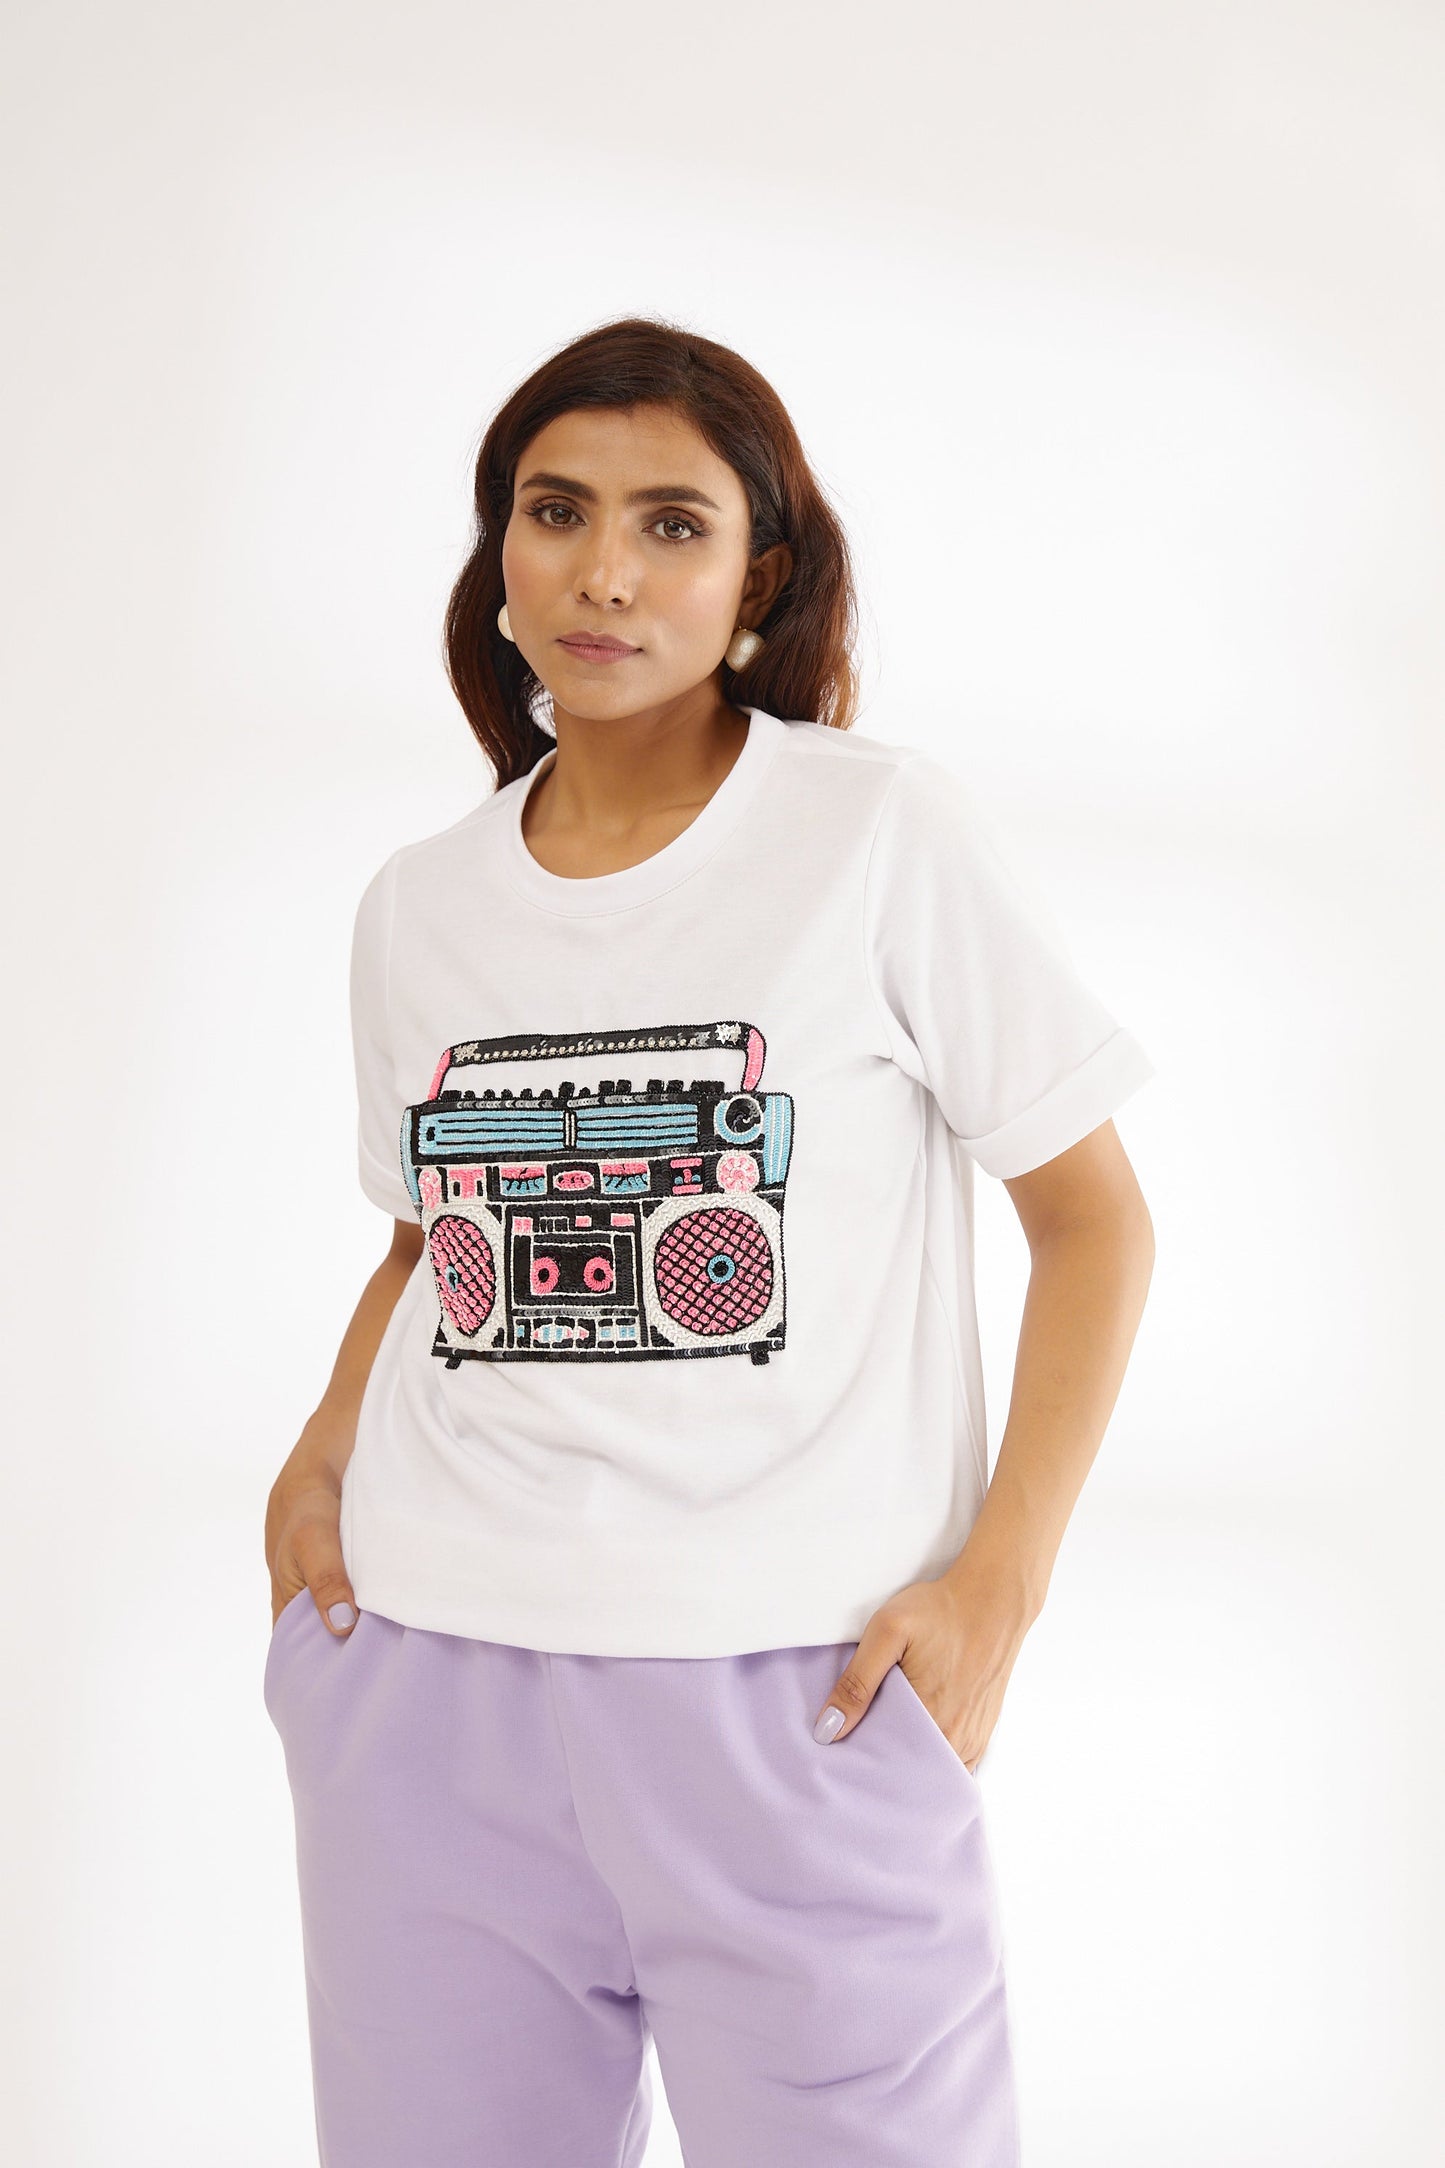 Tape Recorder T-Shirt Set (White) (Women)